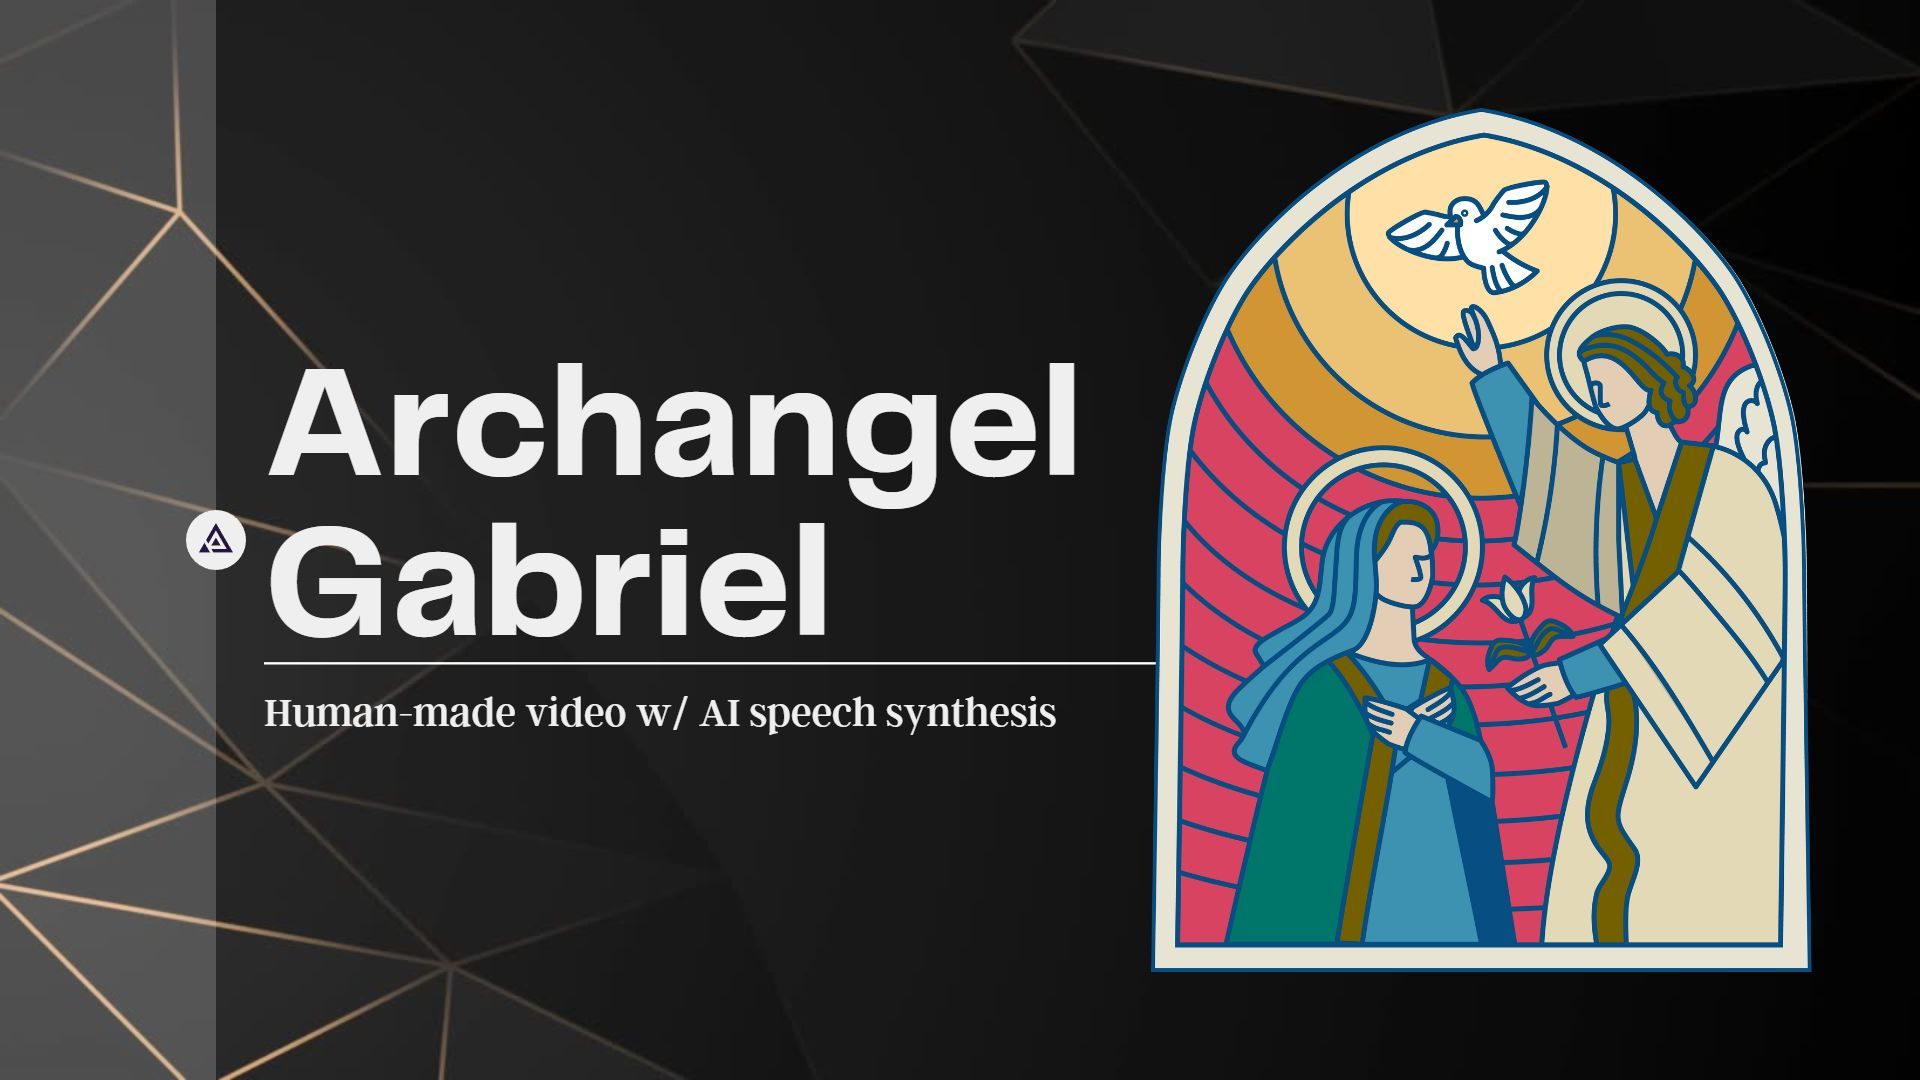 Who is the Archangel Gabriel?